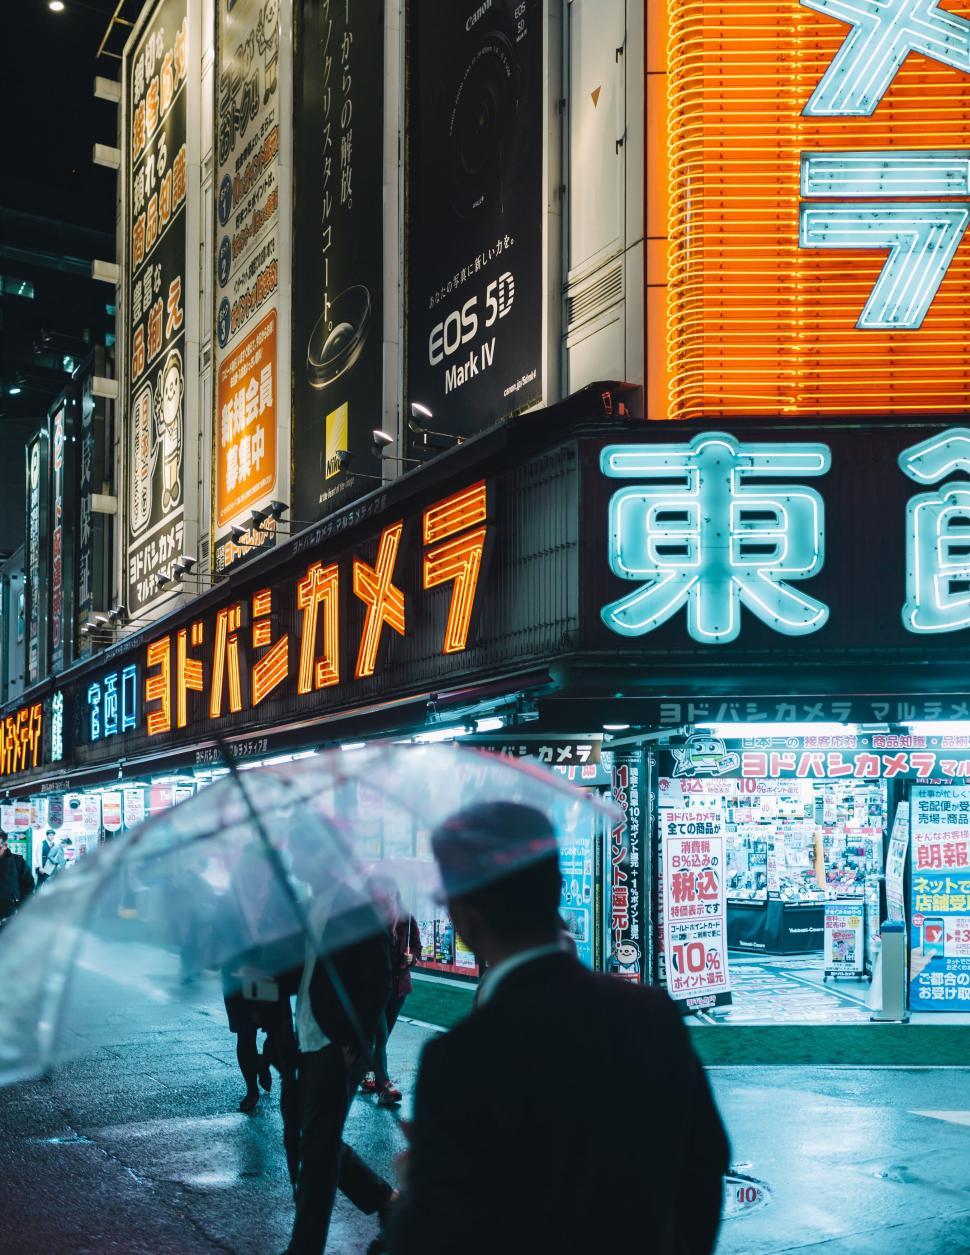 Free Image of Rainy night in neon-lit Tokyo street 